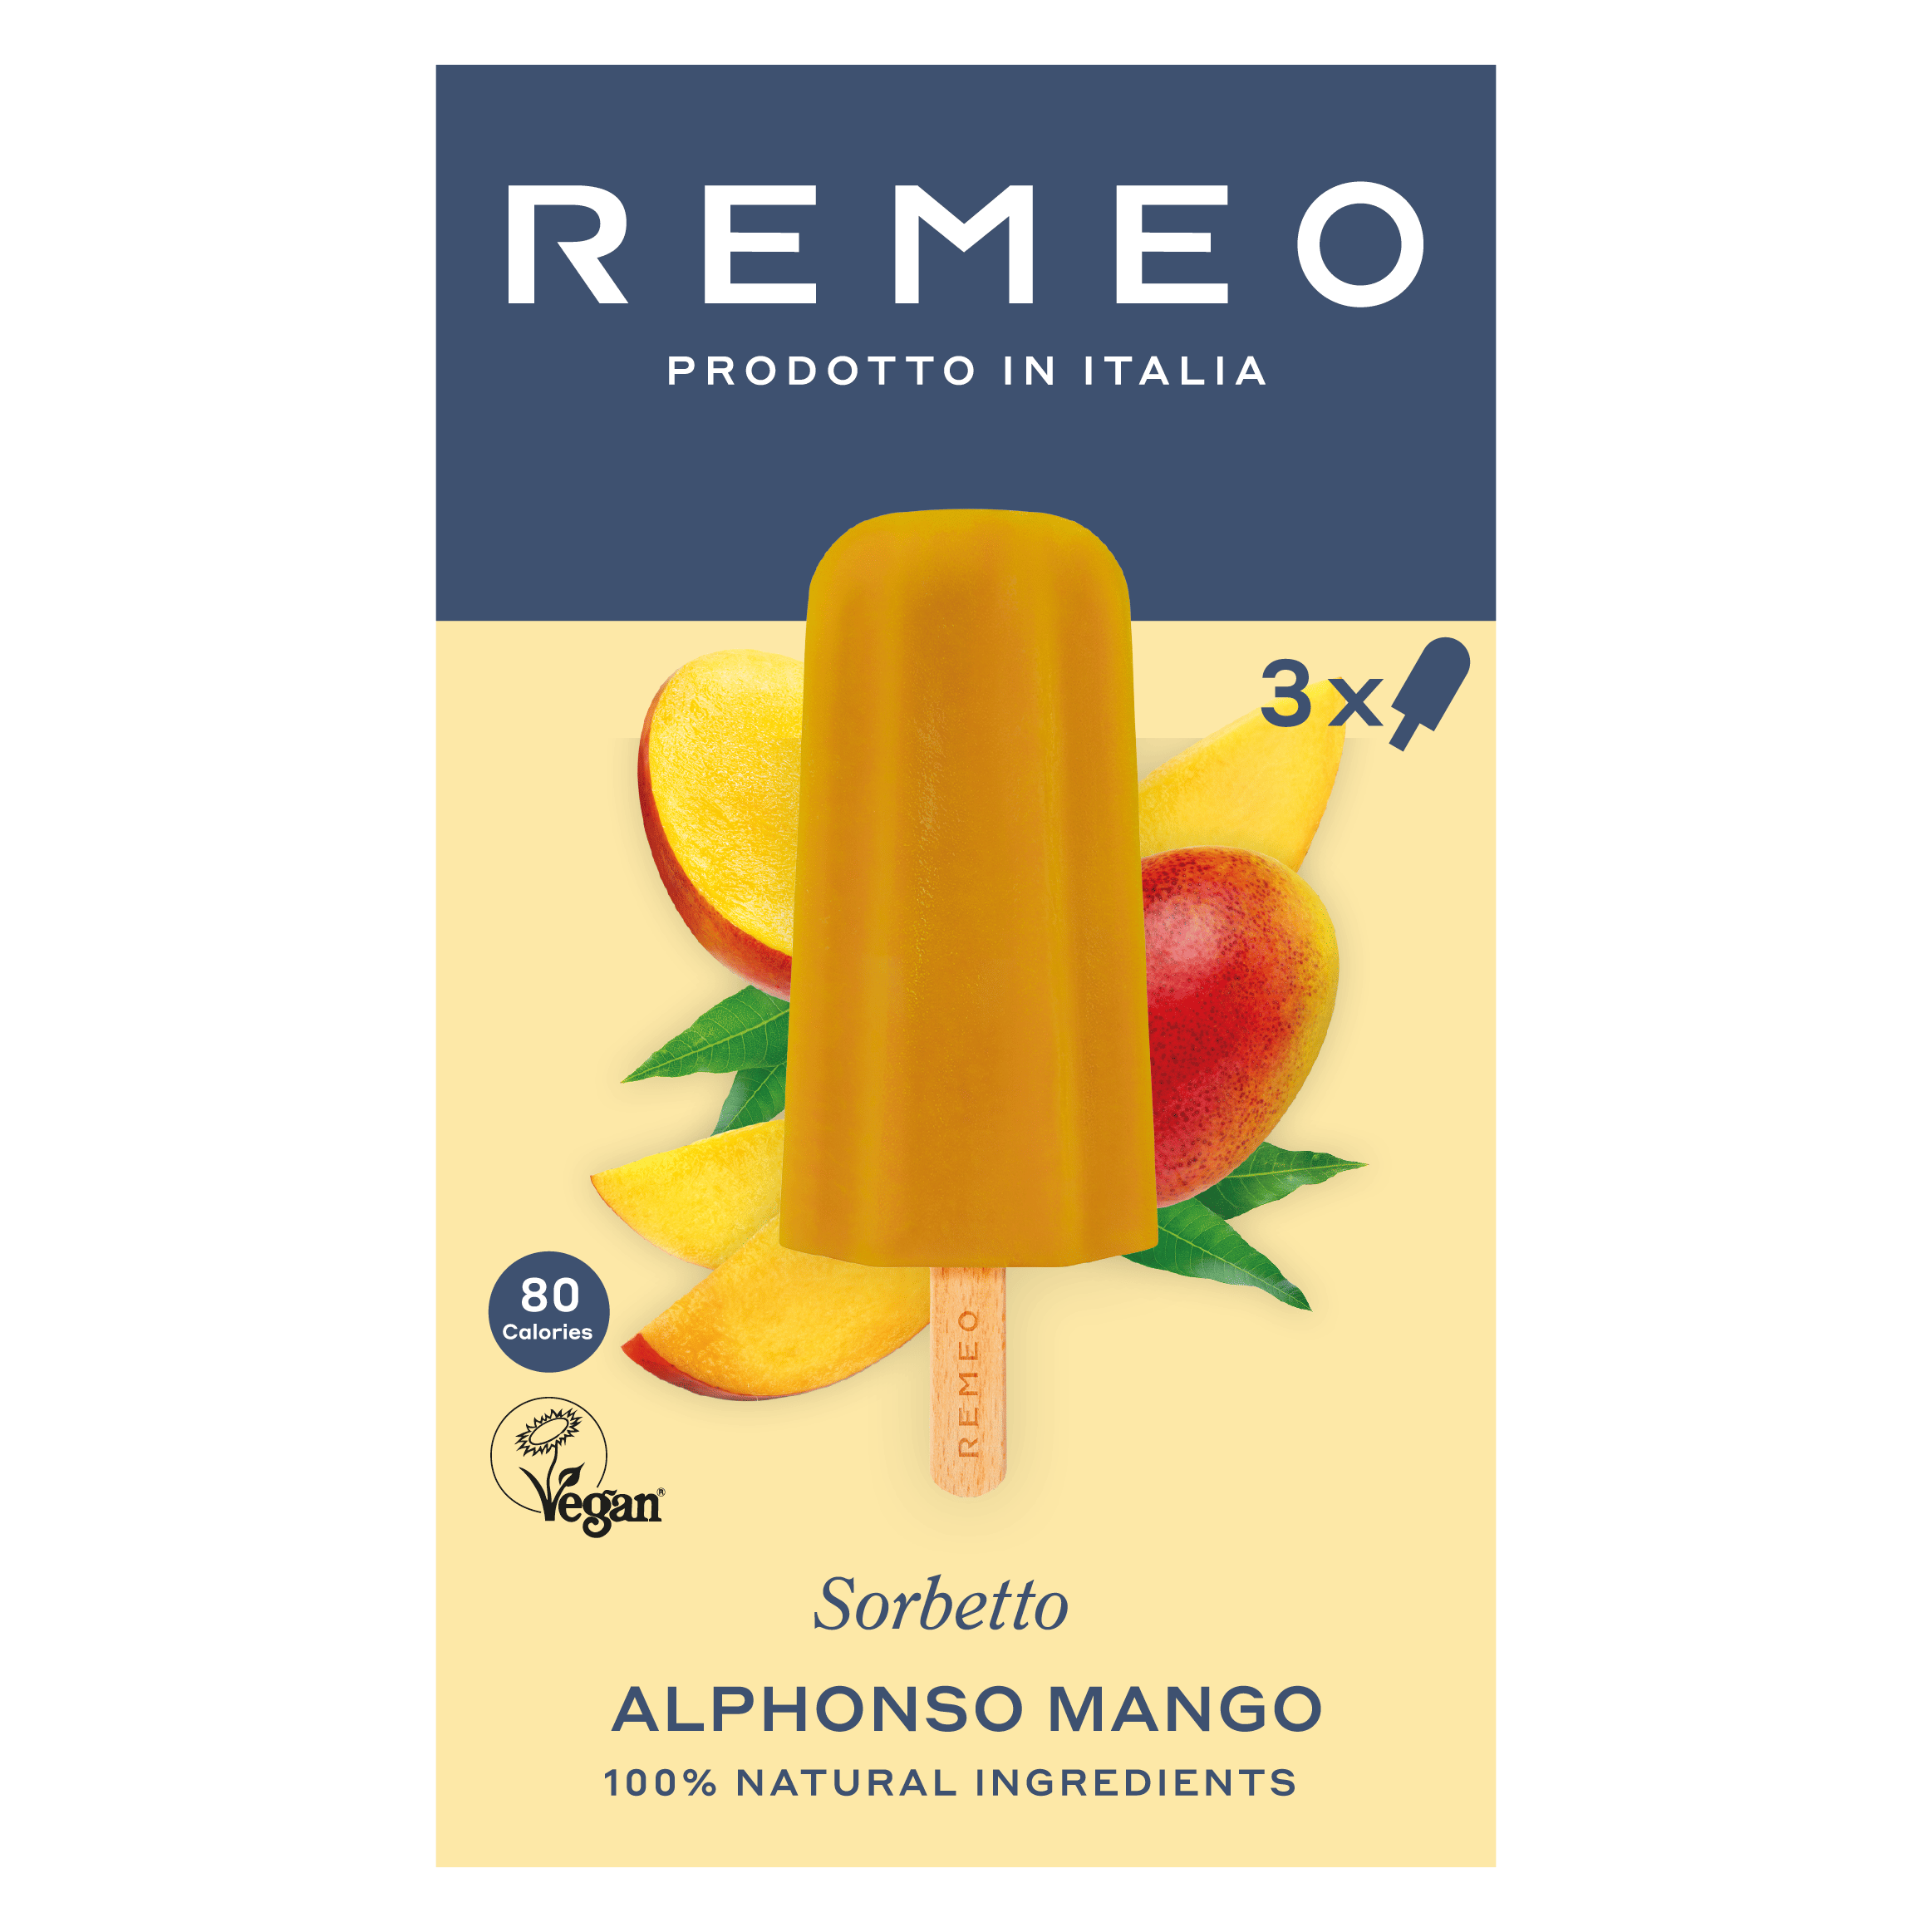 Alphonso Mango Sorbet on a Stick by Remeo Gelato